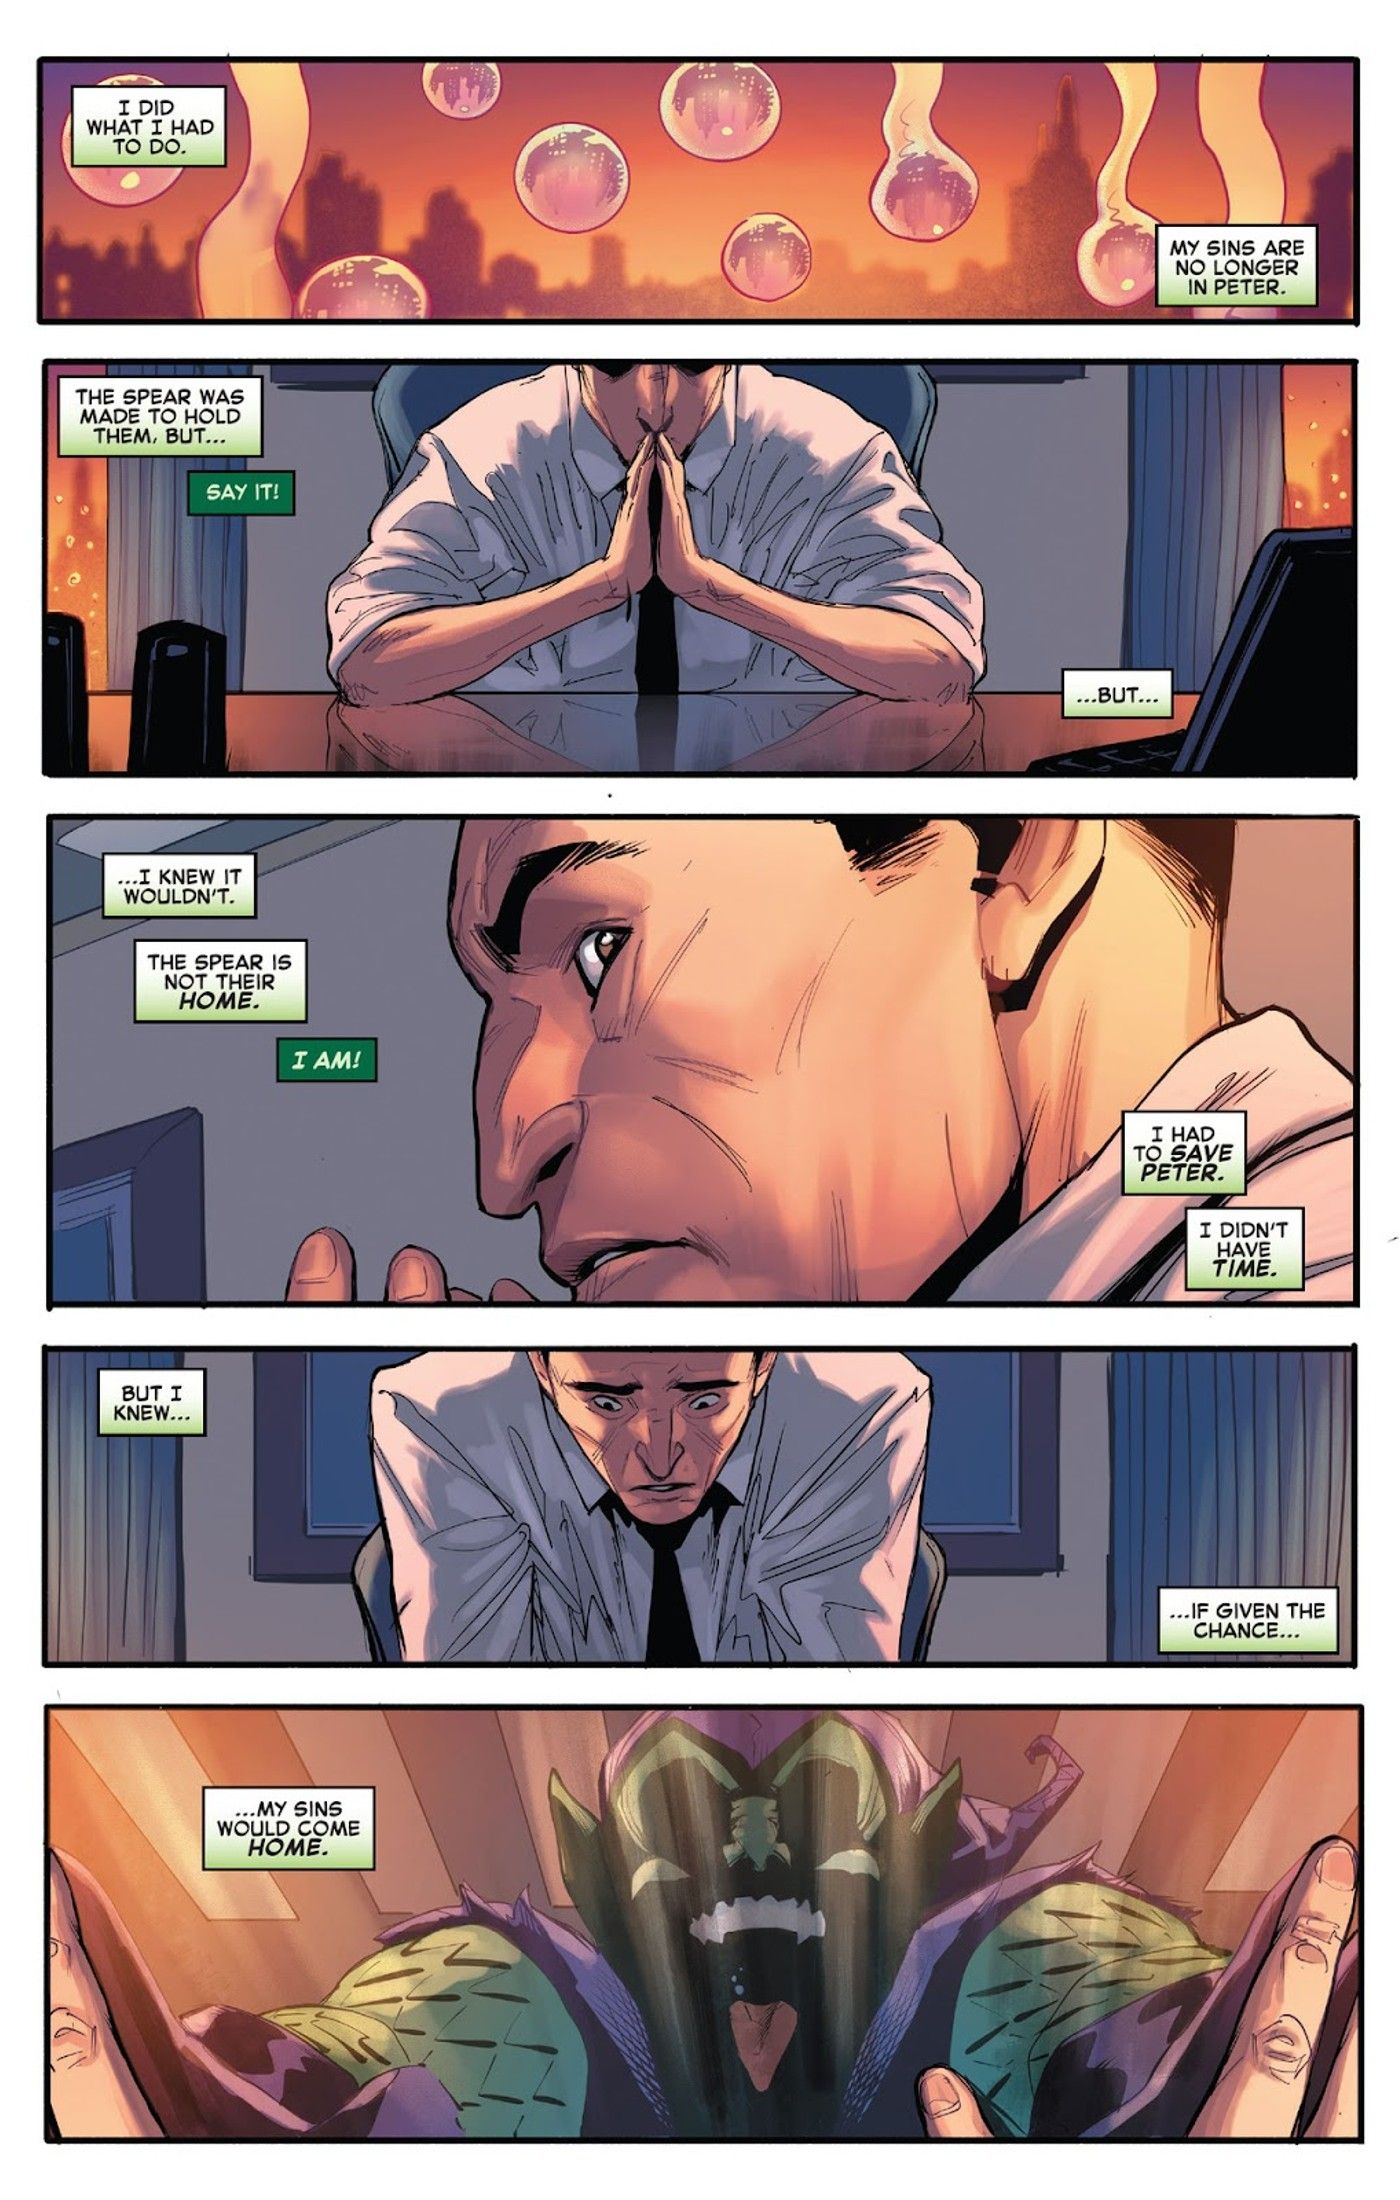 The Amazing Spider-Man #35, Norman Osborn: 